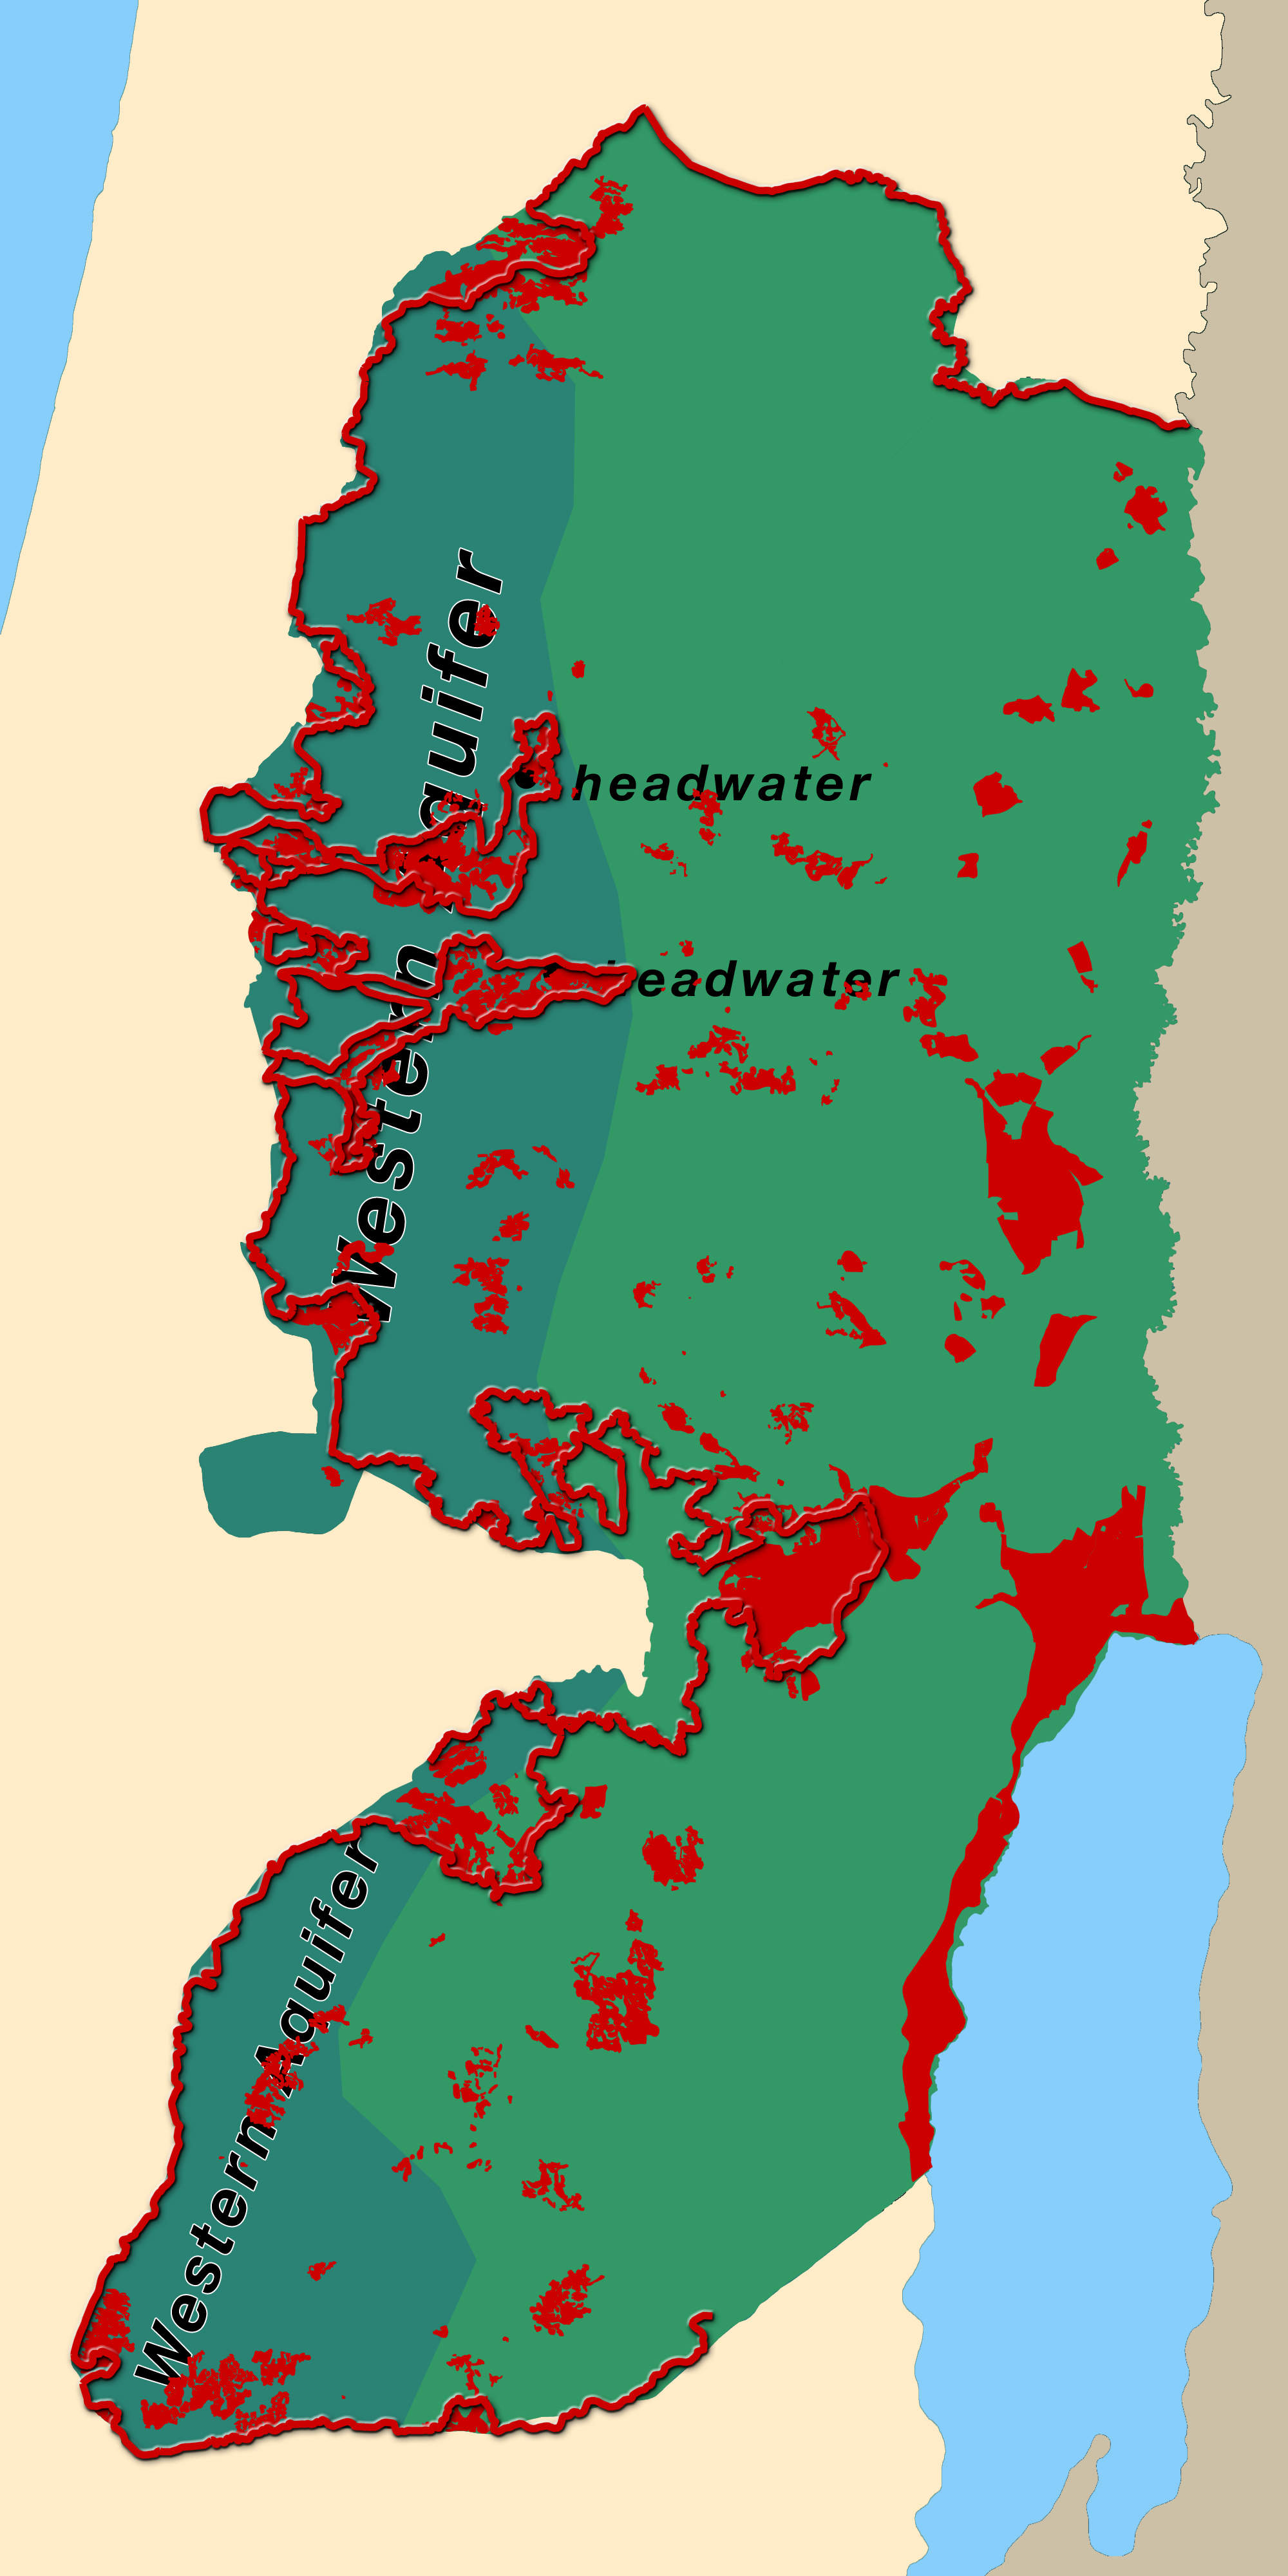 1967 west bank settlements